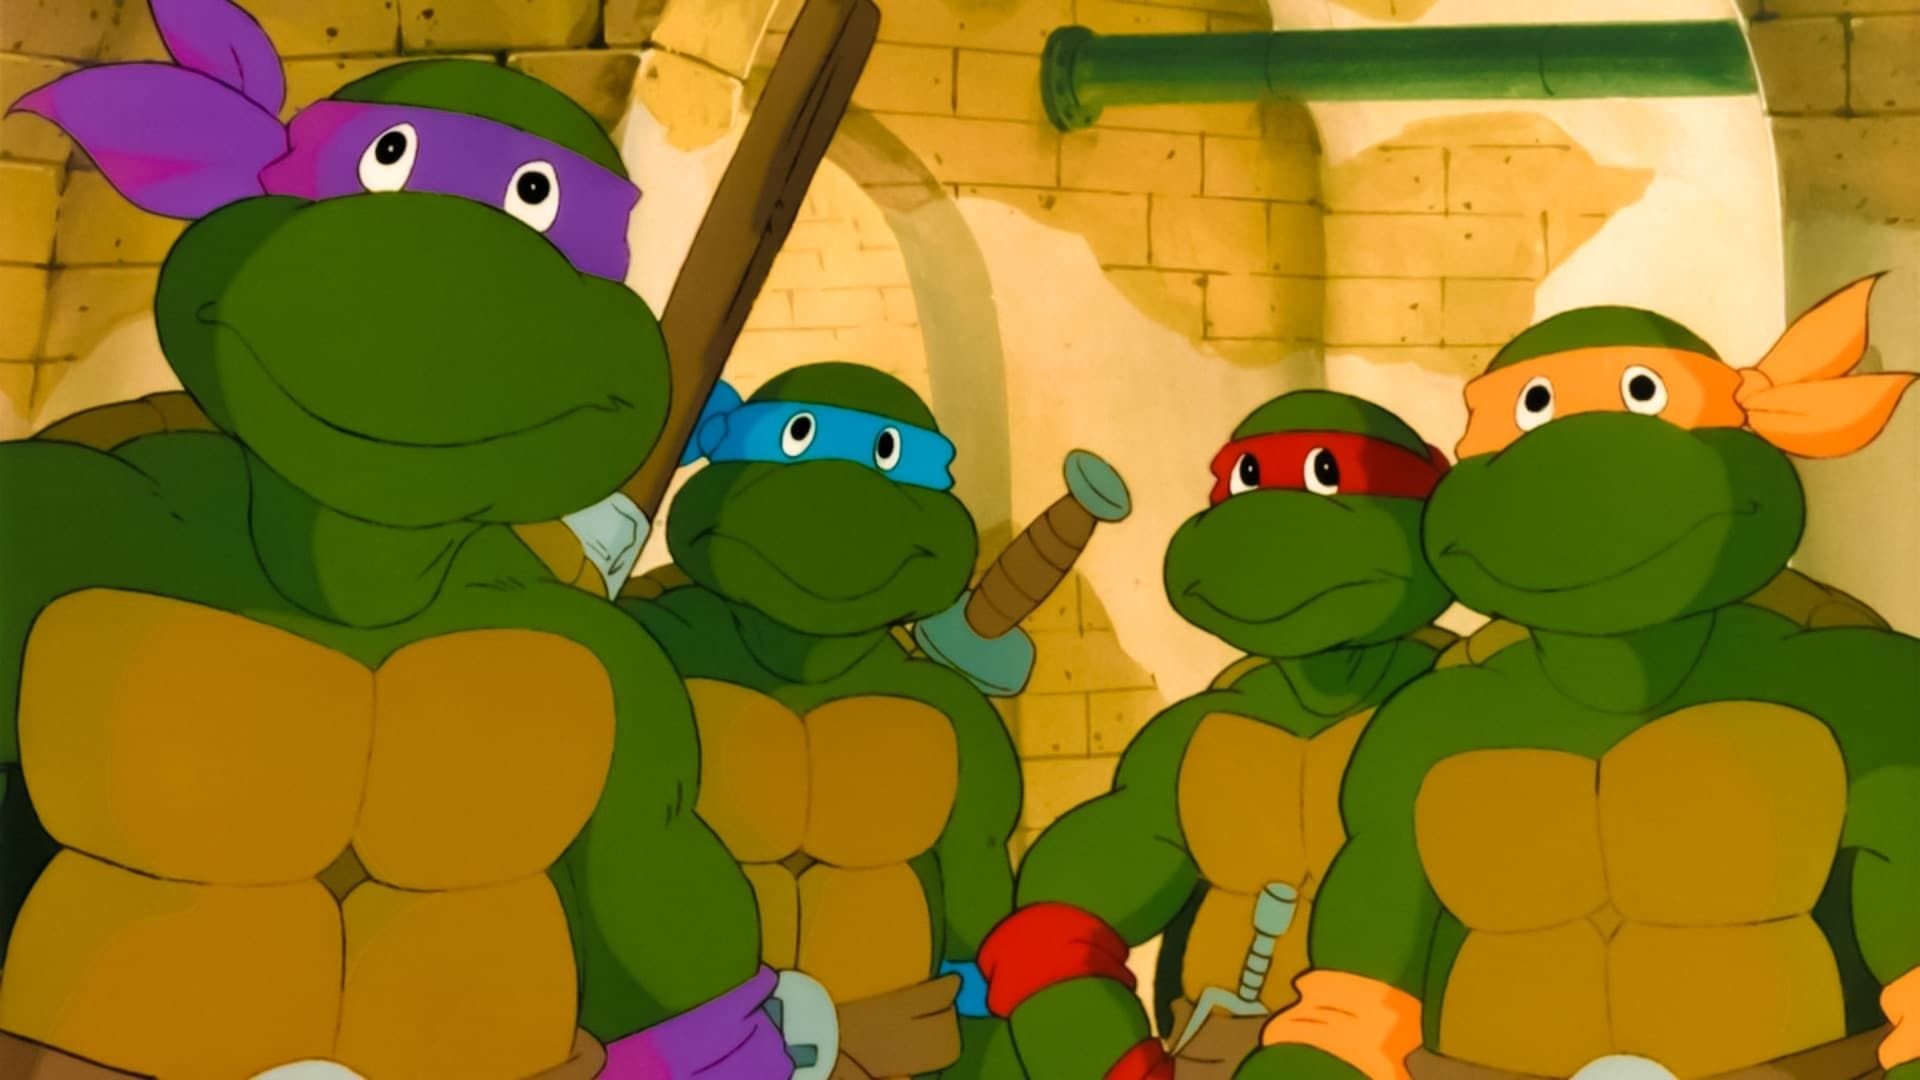 Watch Teenage Mutant Ninja Turtles (2012) · Season 4 Episode 26 · Owari  Full Episode Online - Plex